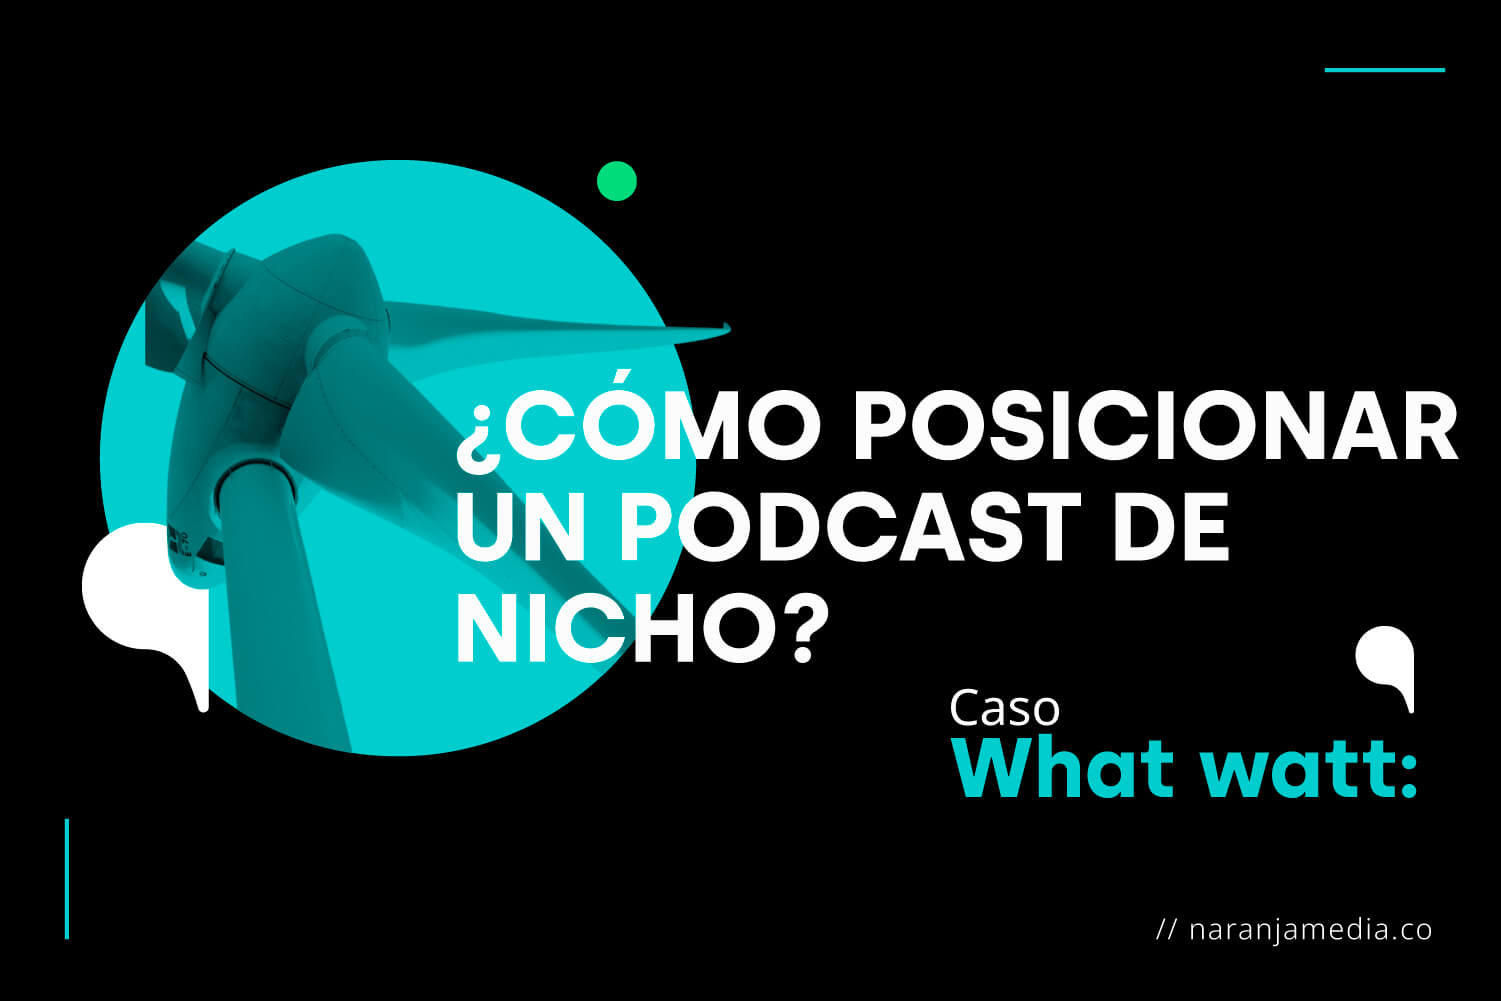 ¿Como posicionar un podcast de nicho?